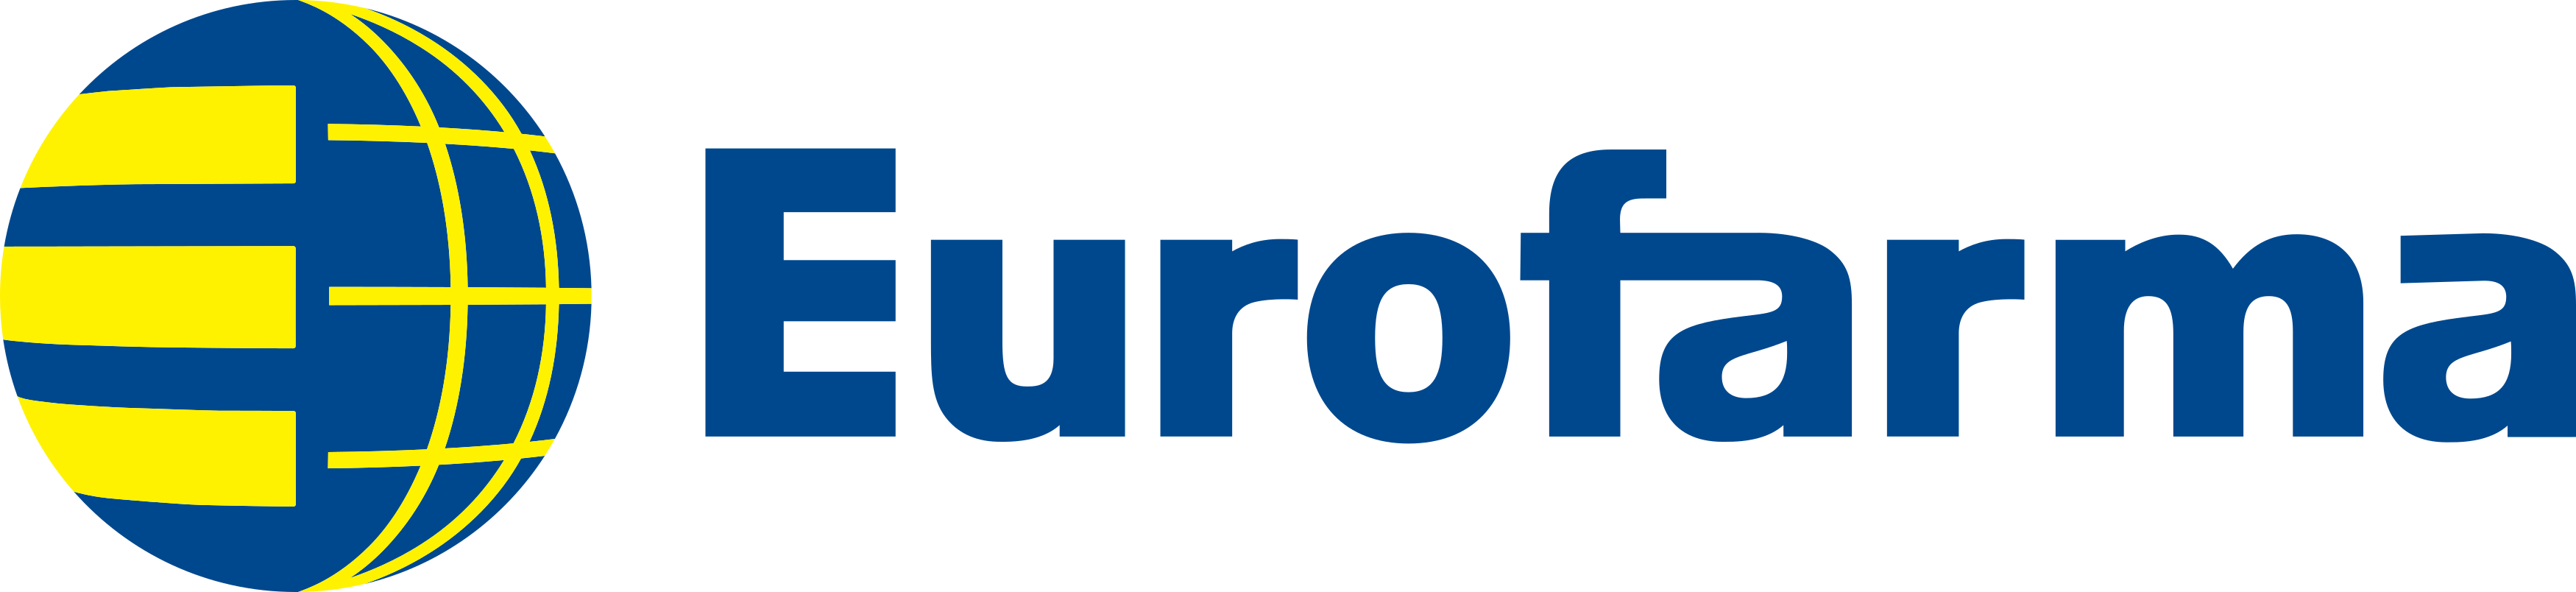 eurofarma-logo.png